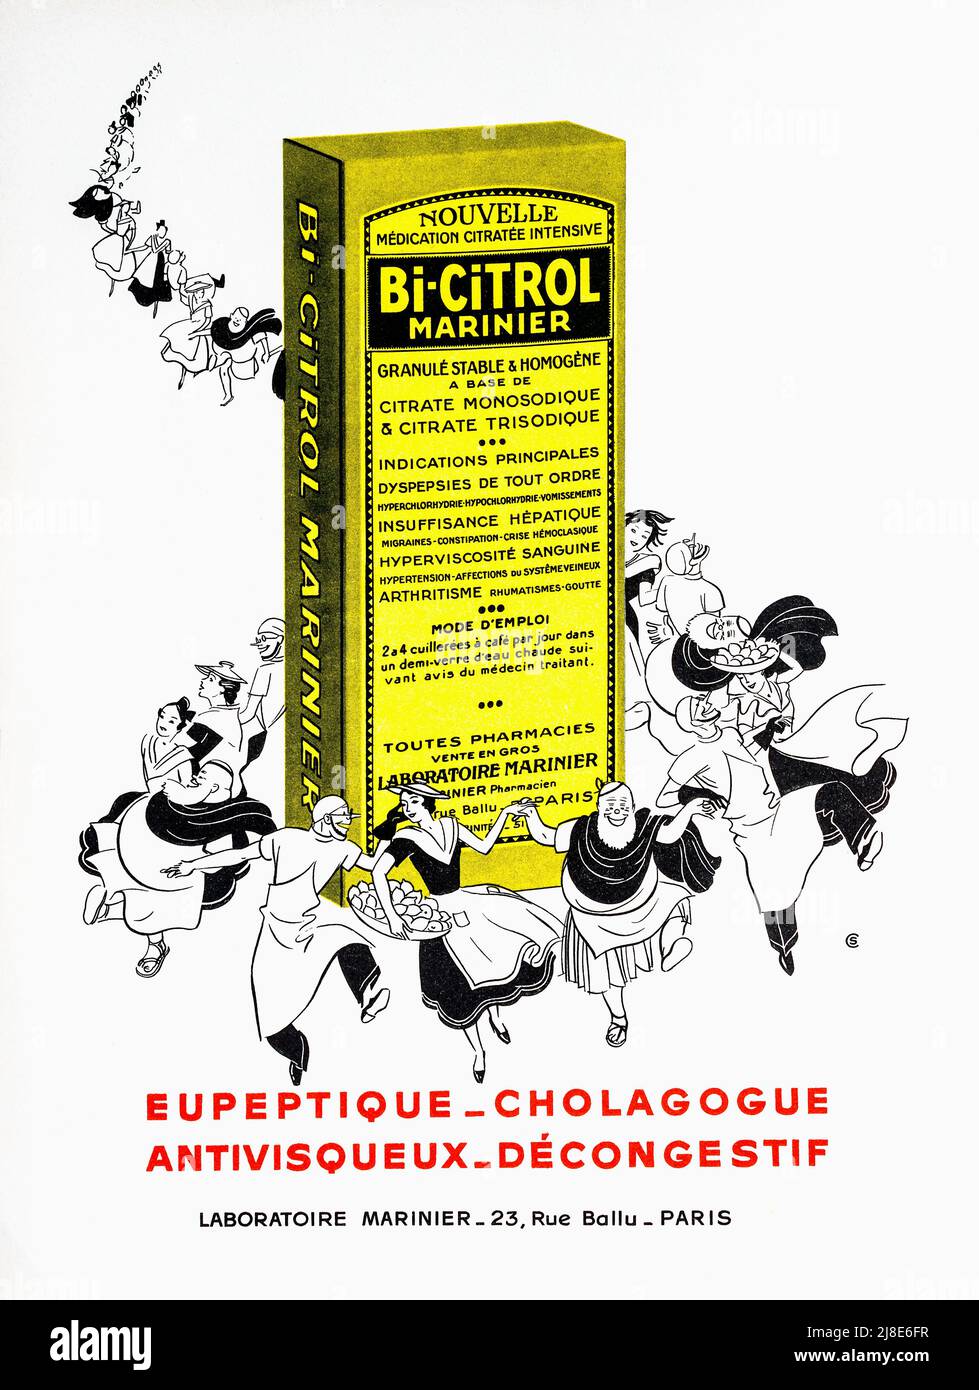 1940/50s French advert for 'Bi-Citrol Marinier' medicine. Stock Photo